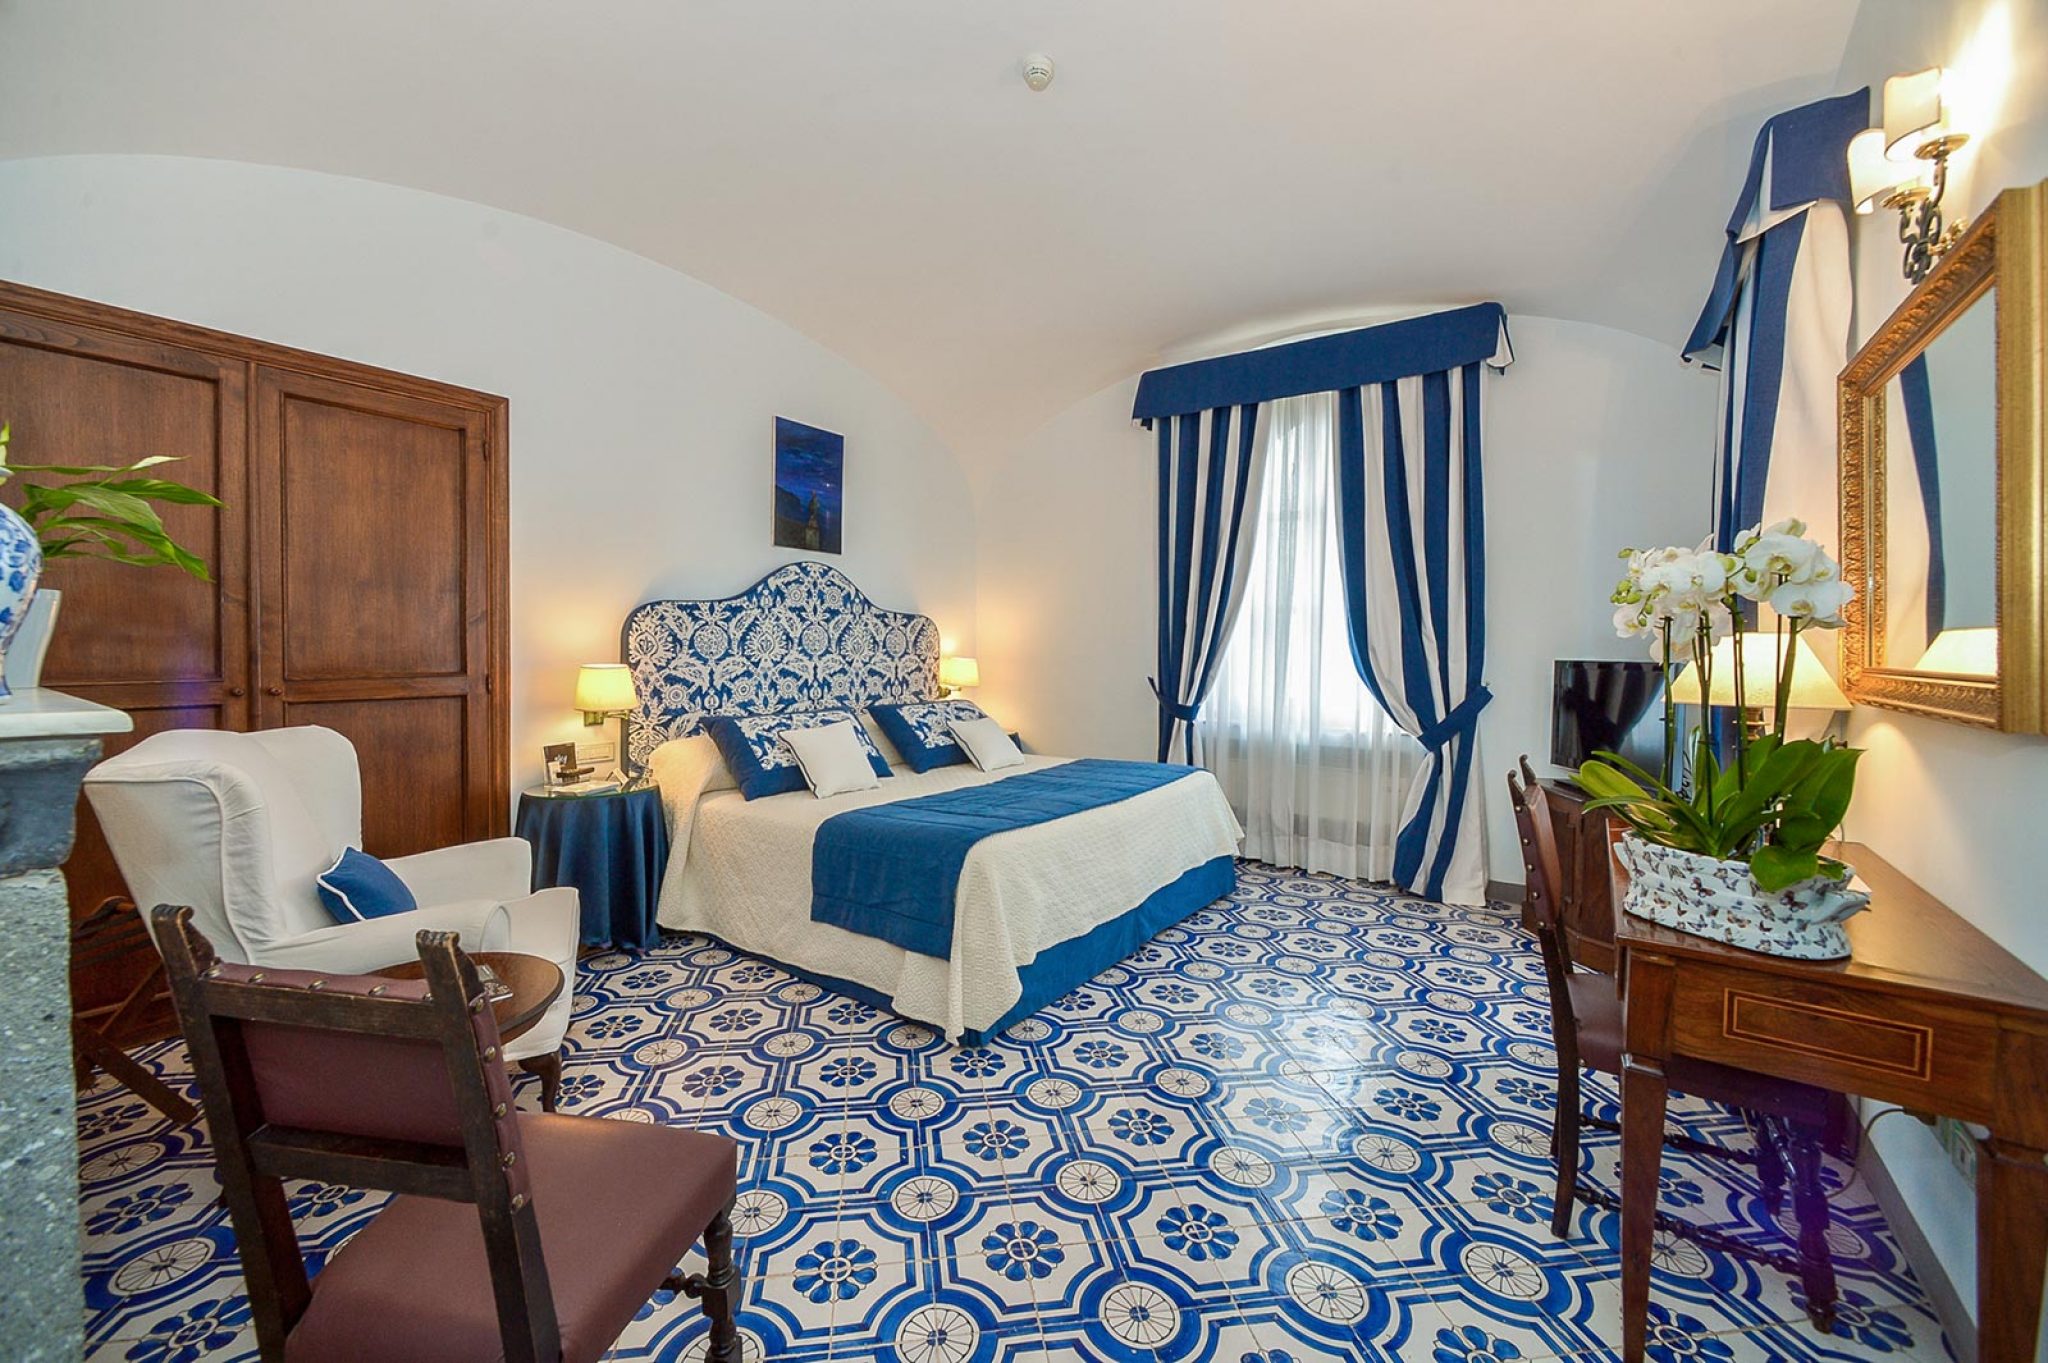 Deluxe Rooms - Hotel Villa Cimbrone - Ravello - Amalfi Coast